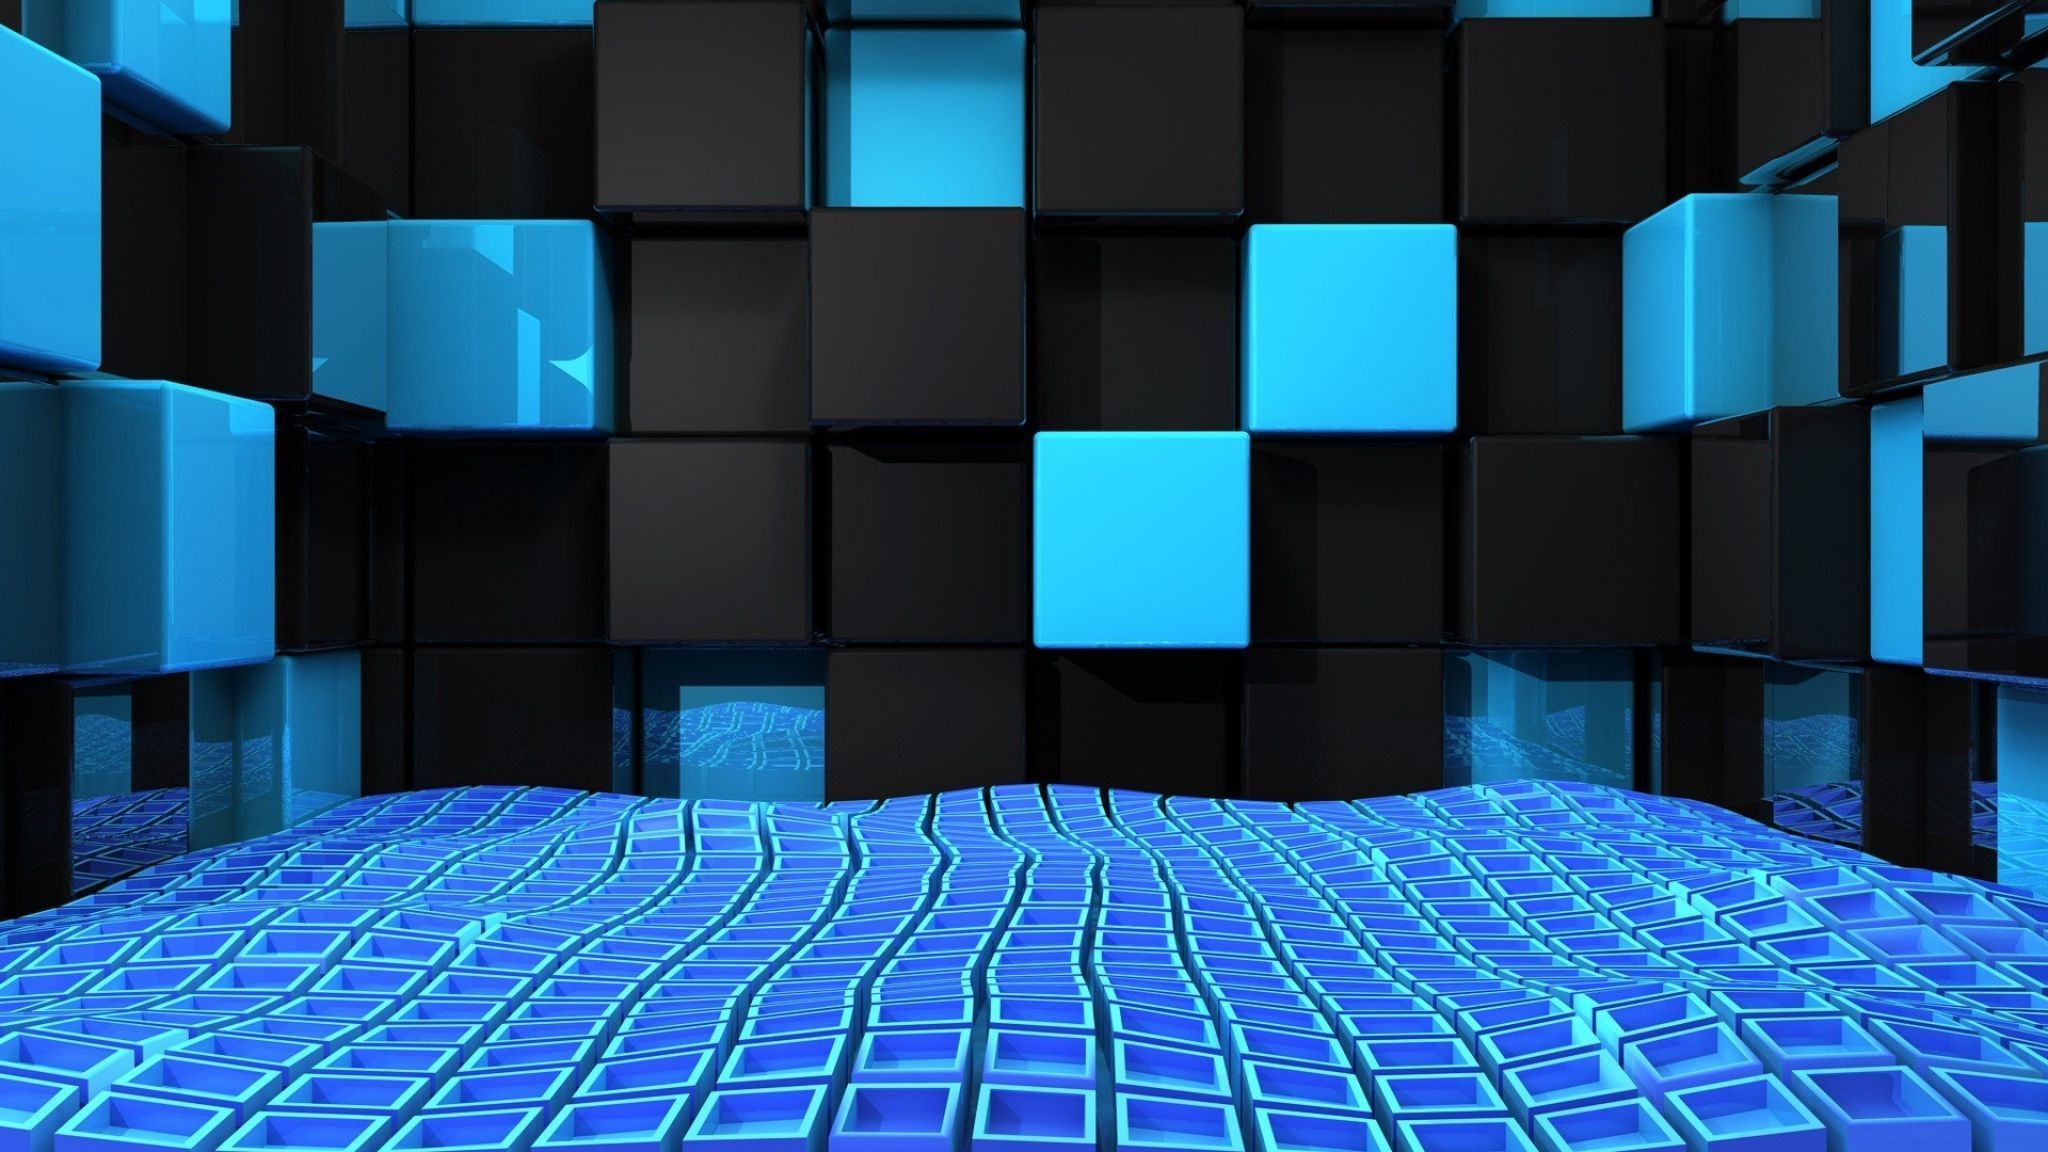 HD Cube Wallpapers HD, Desktop Backgrounds 2048x1152 Downloads All ...